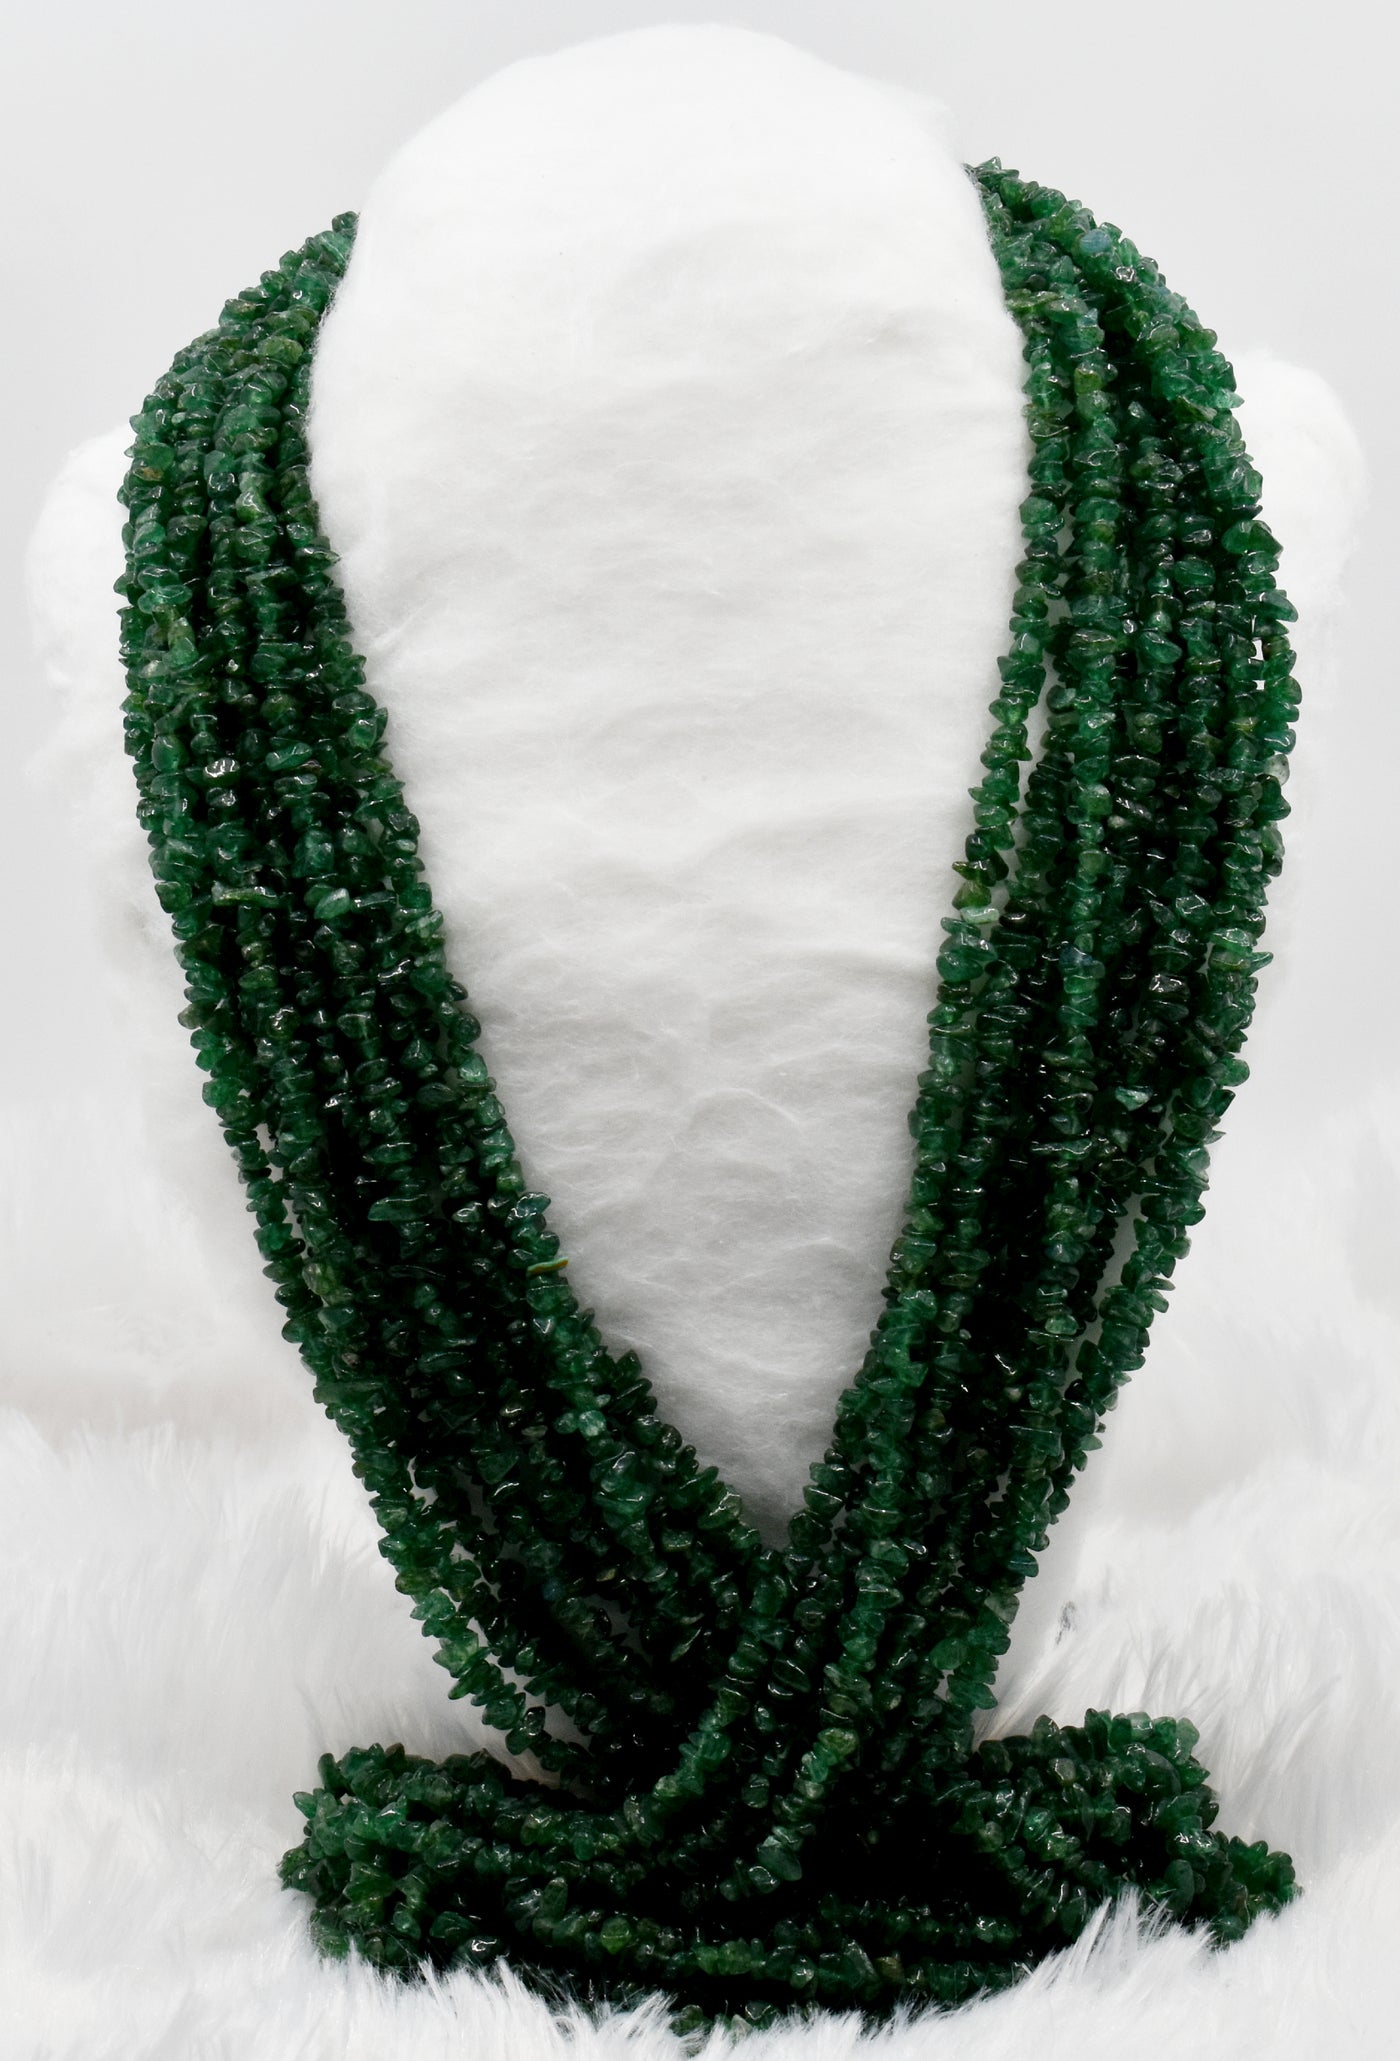 Perles non coupées en jade Grosullar brutes, perles de pierre brute en vrac.